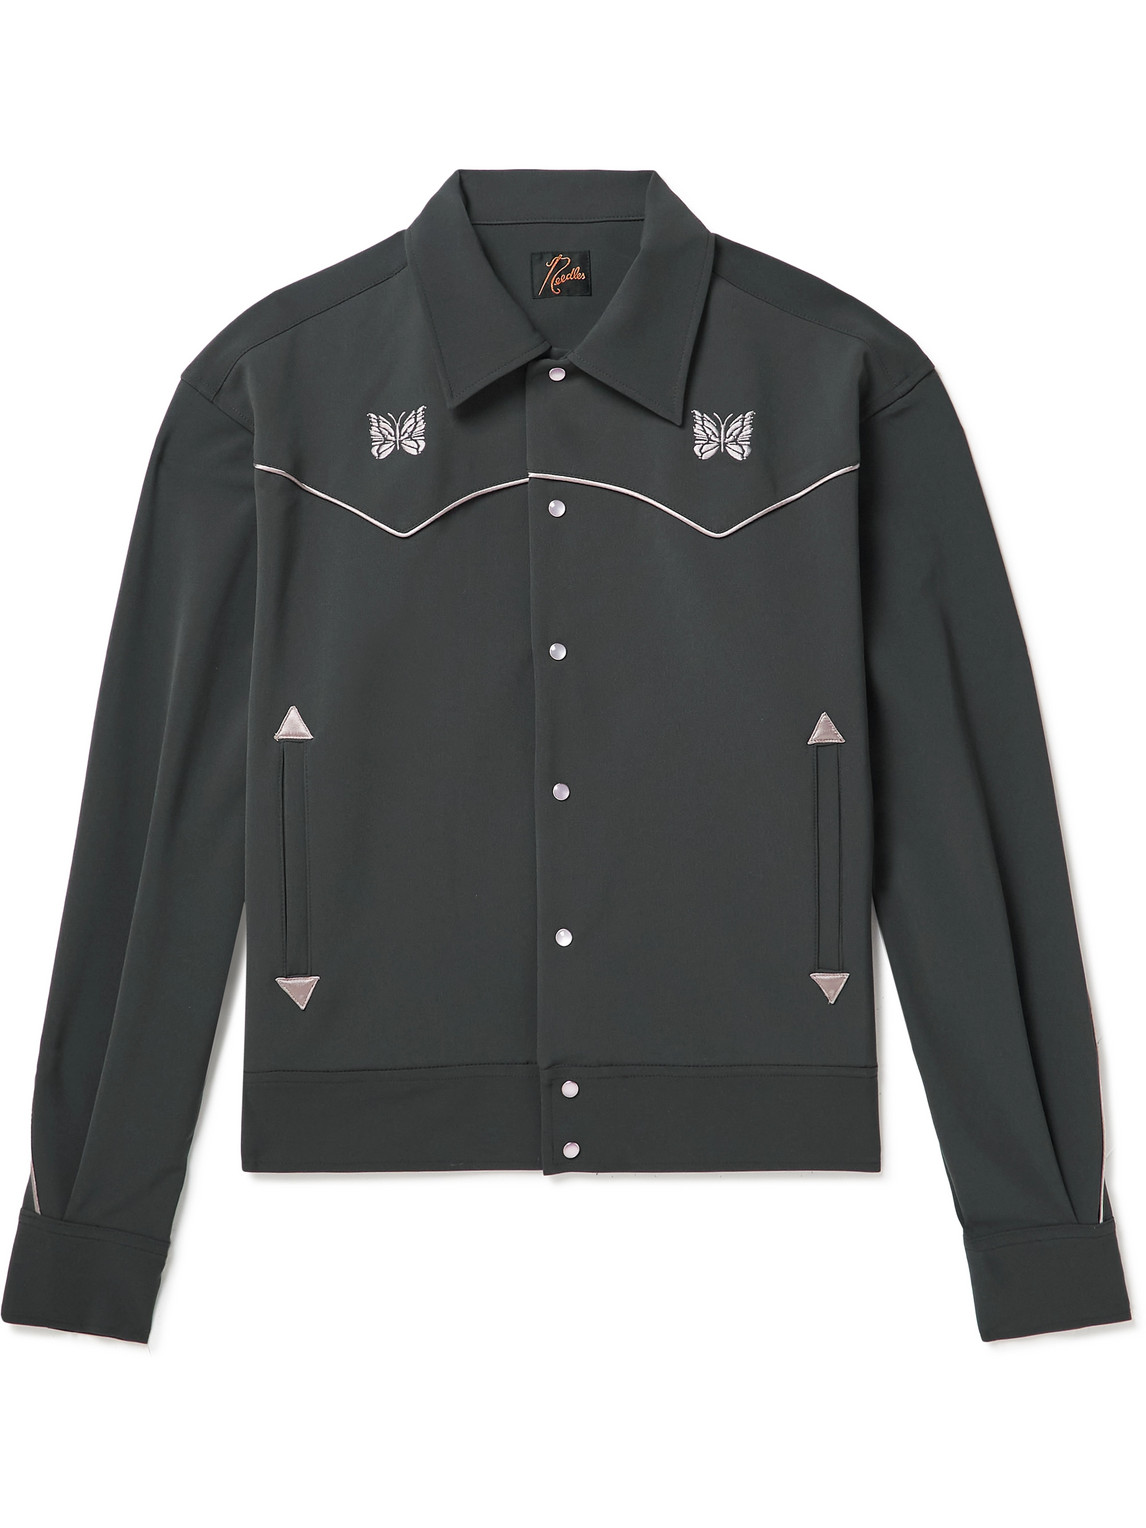 NEEDLES cowboy jacket XL ブラック 黒 black | hartwellspremium.com